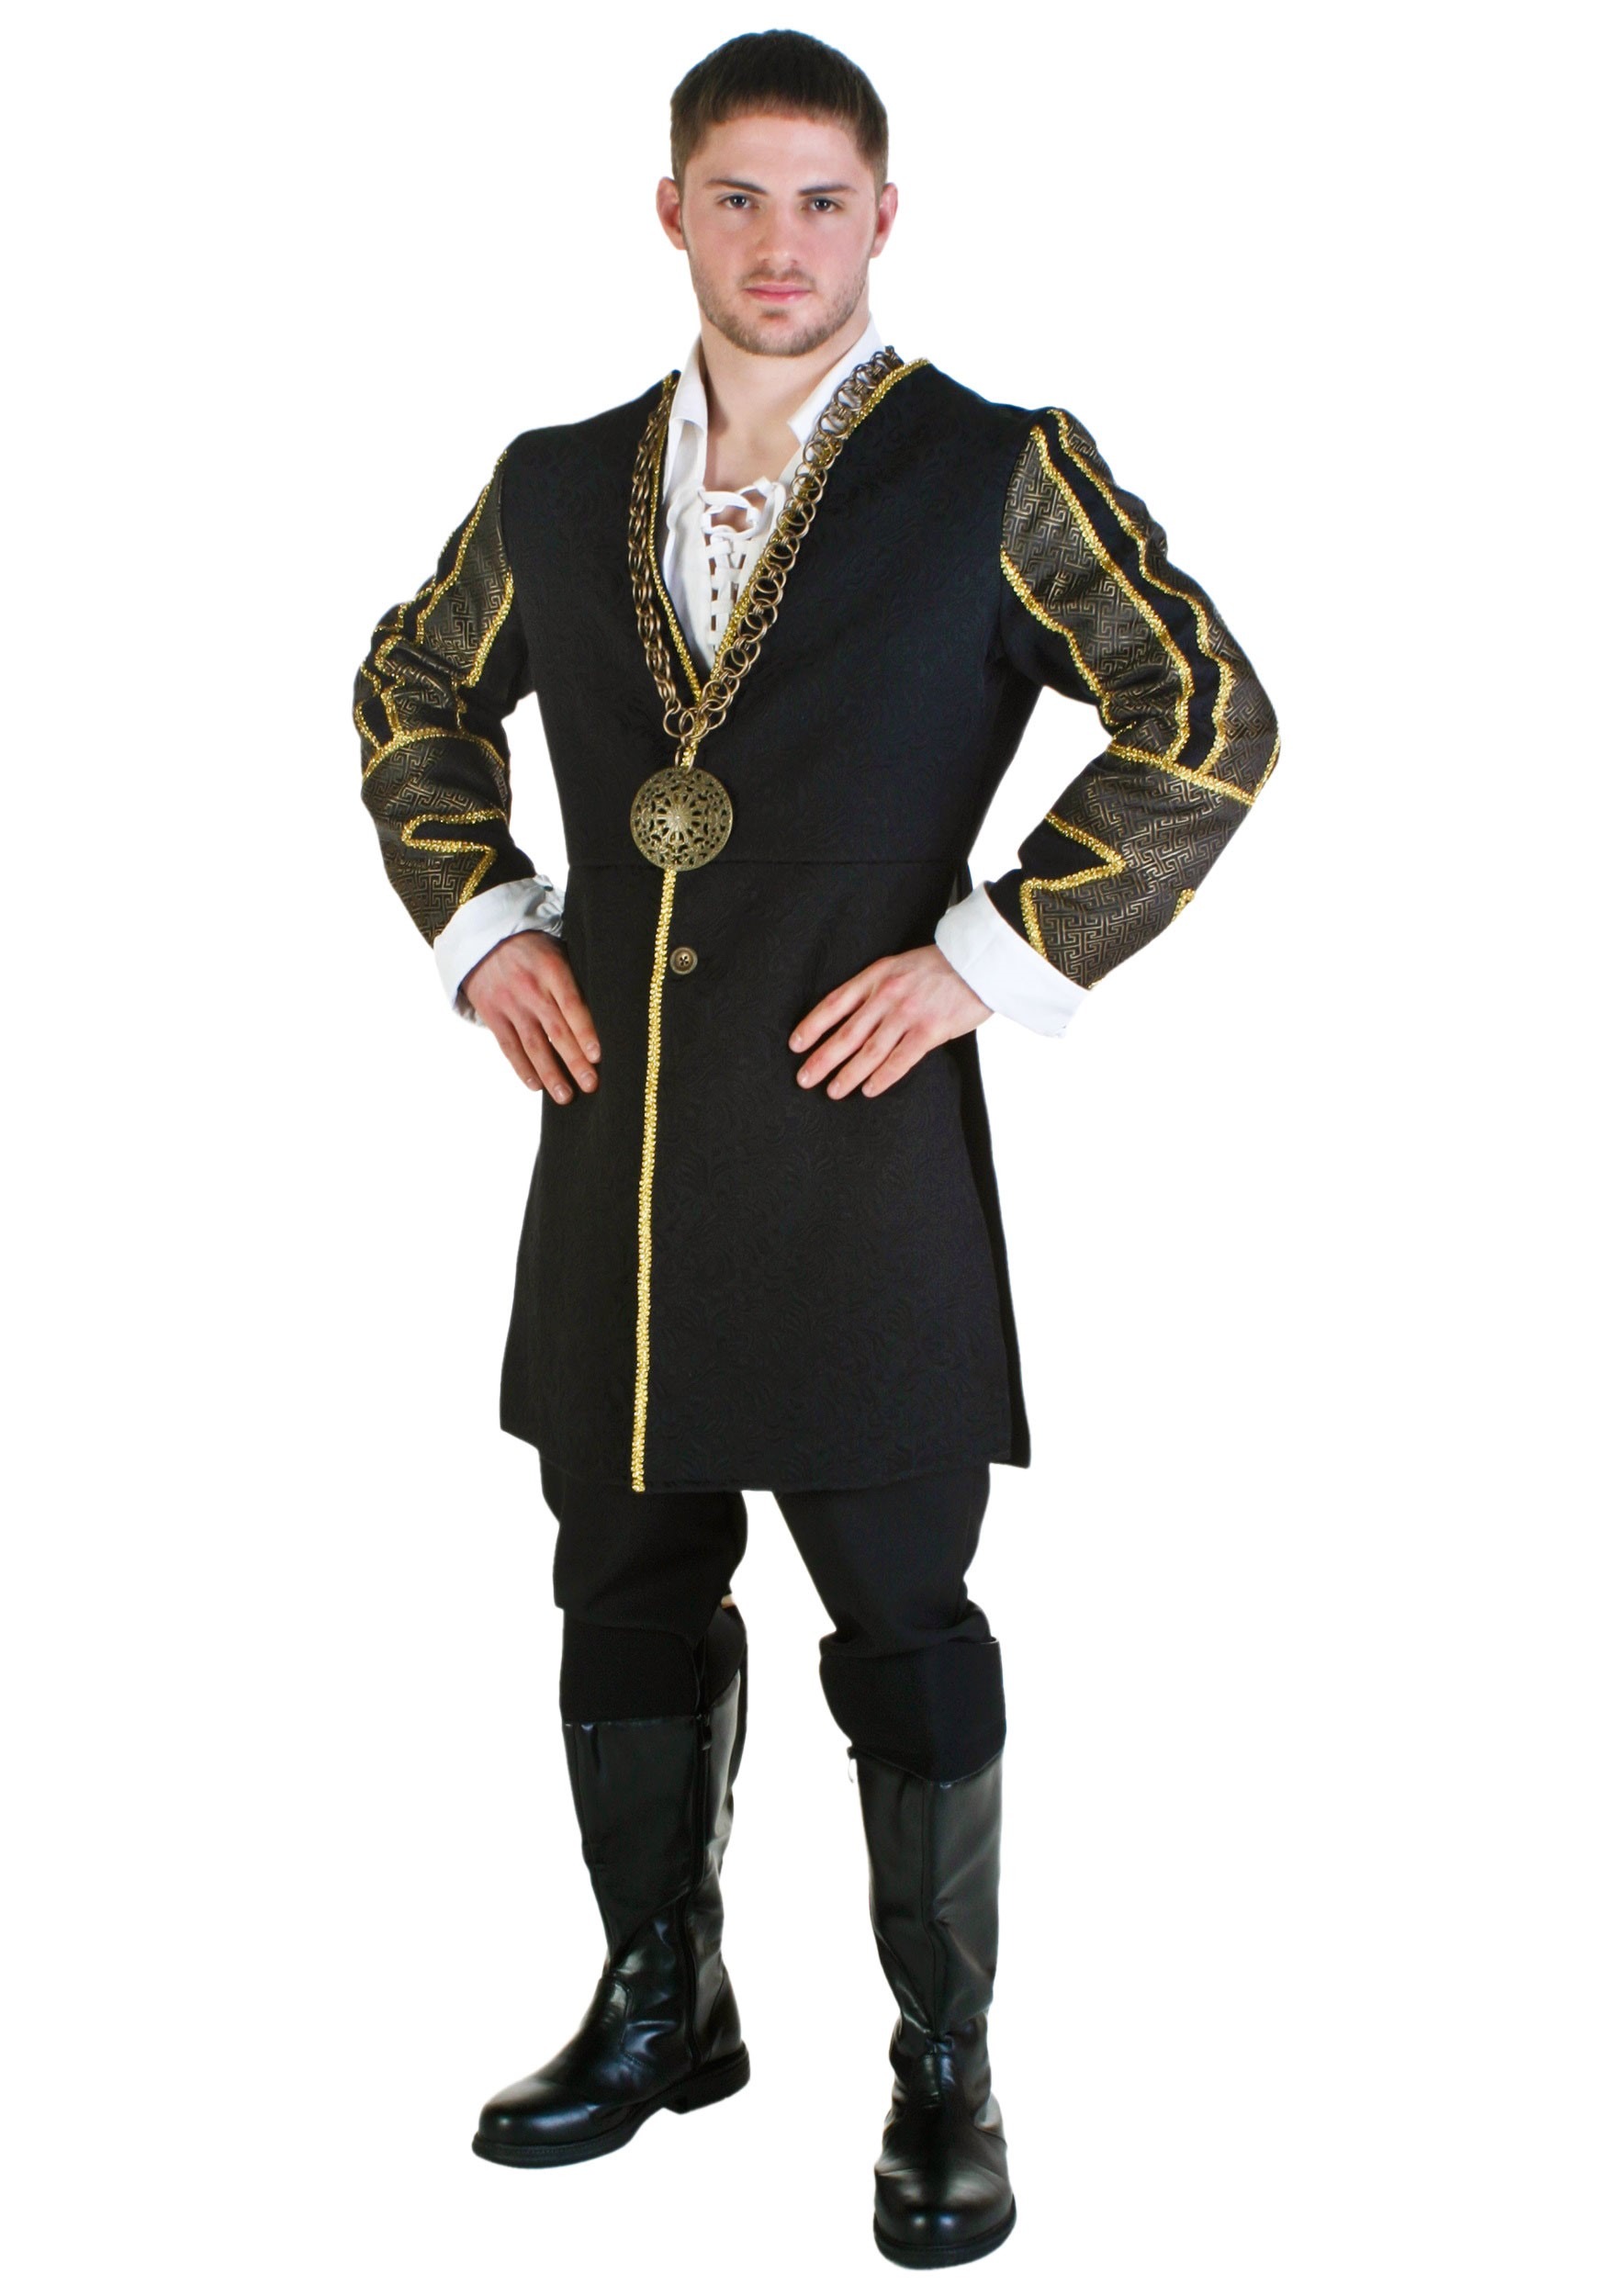 Photos - Fancy Dress Flama FUN Costumes King Henry VIII Men's Costume Black FUN2621 